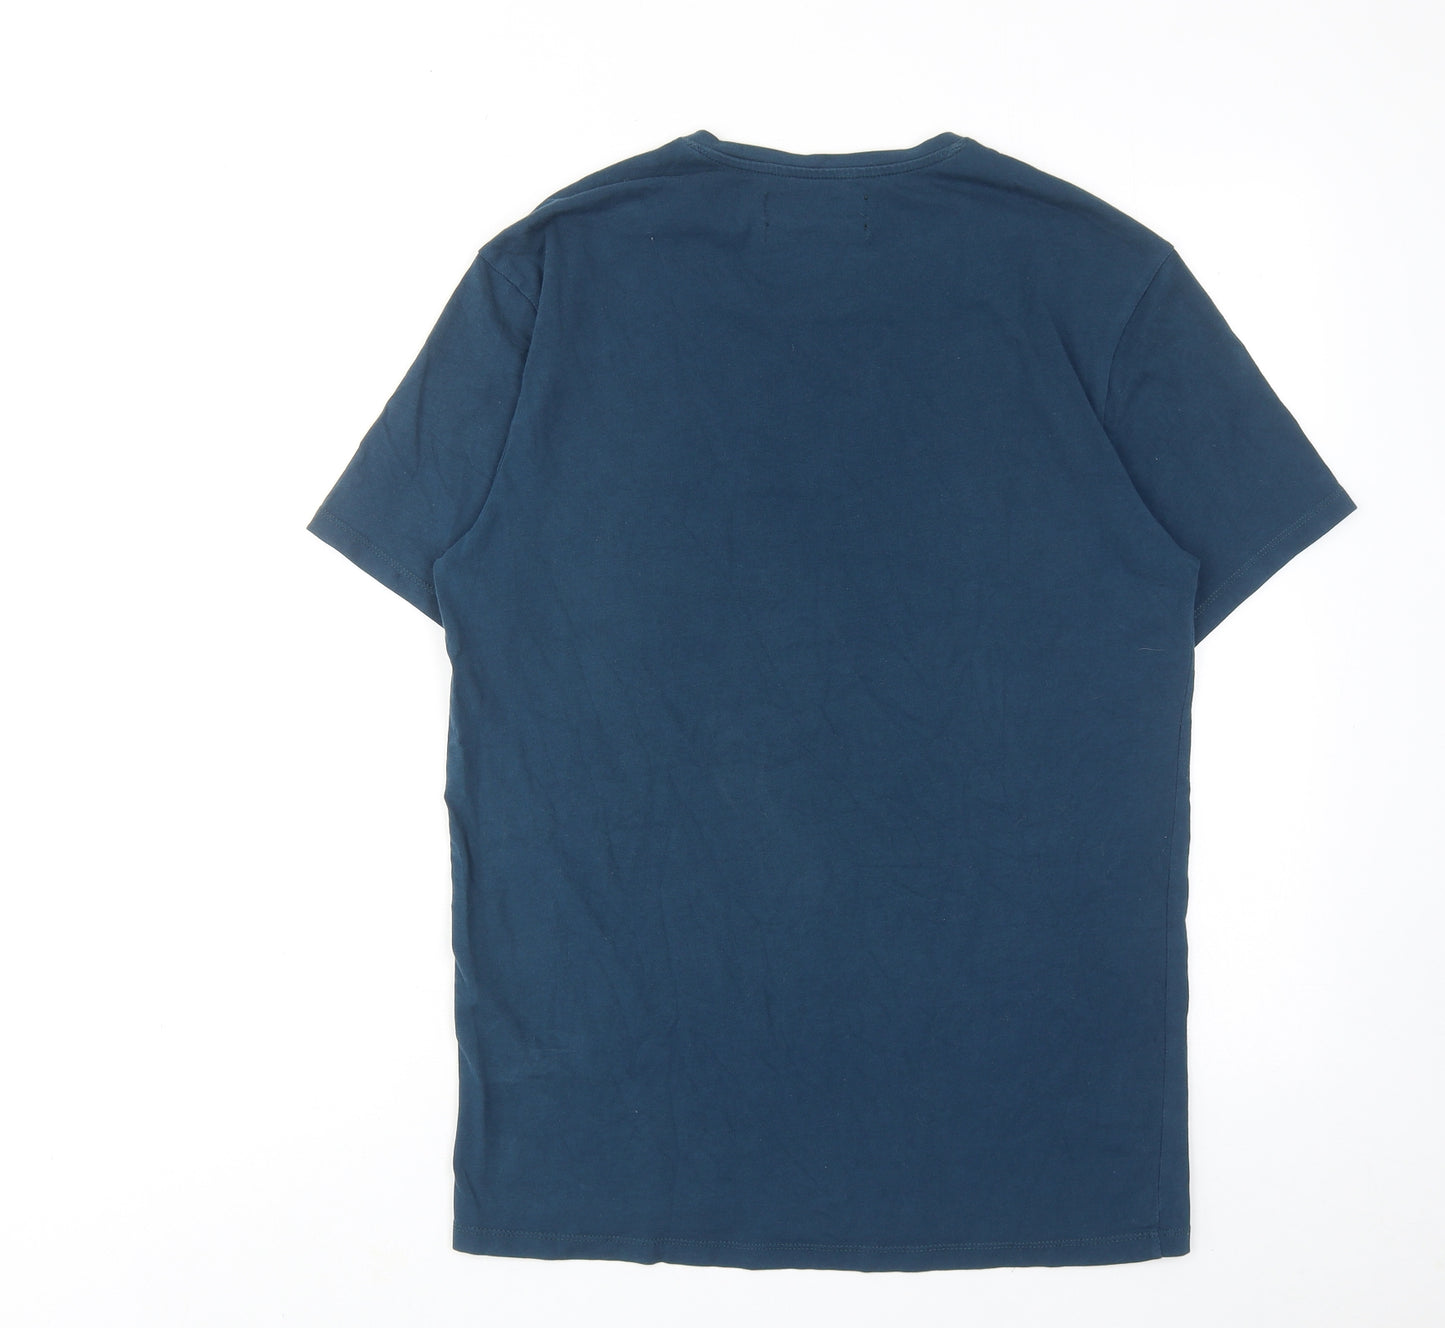 Zara Mens Blue Cotton T-Shirt Size L Round Neck